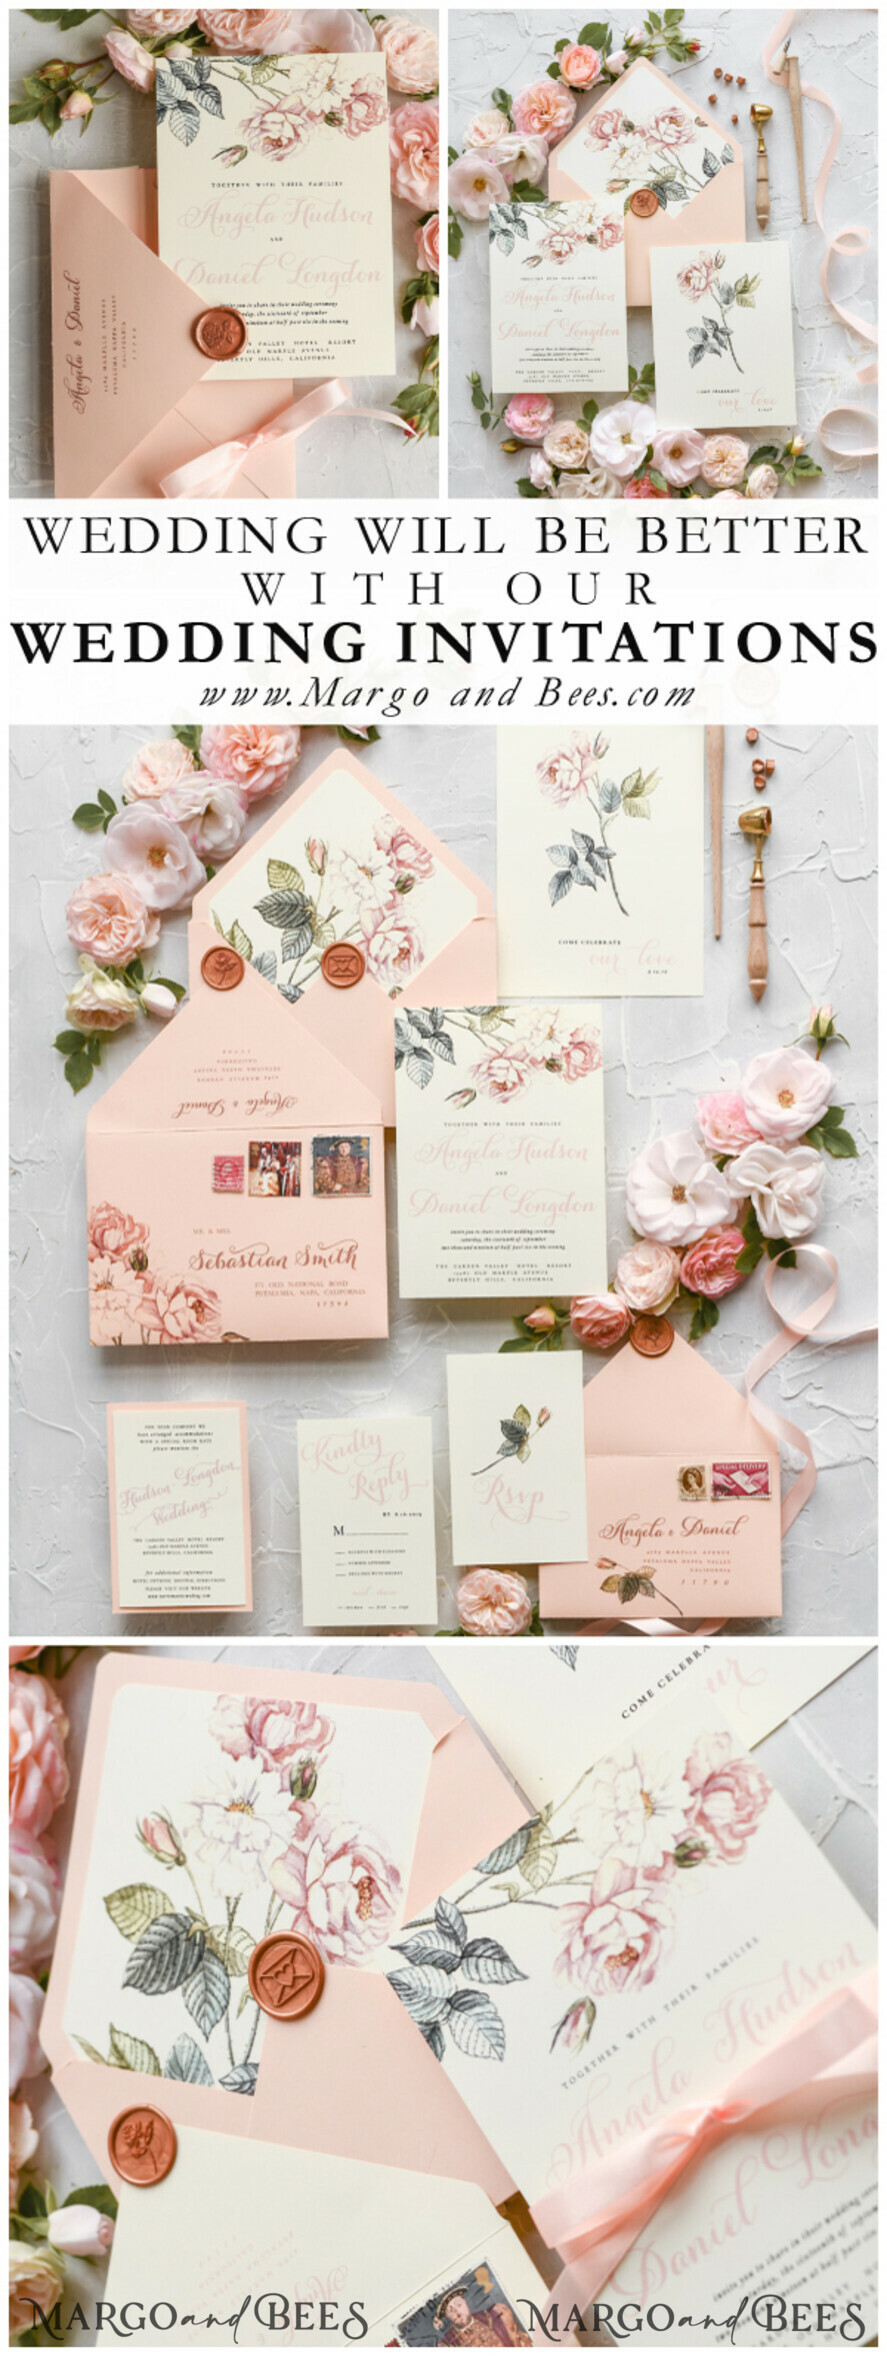 Wedding invitations suite colorful romantic stationery vintage